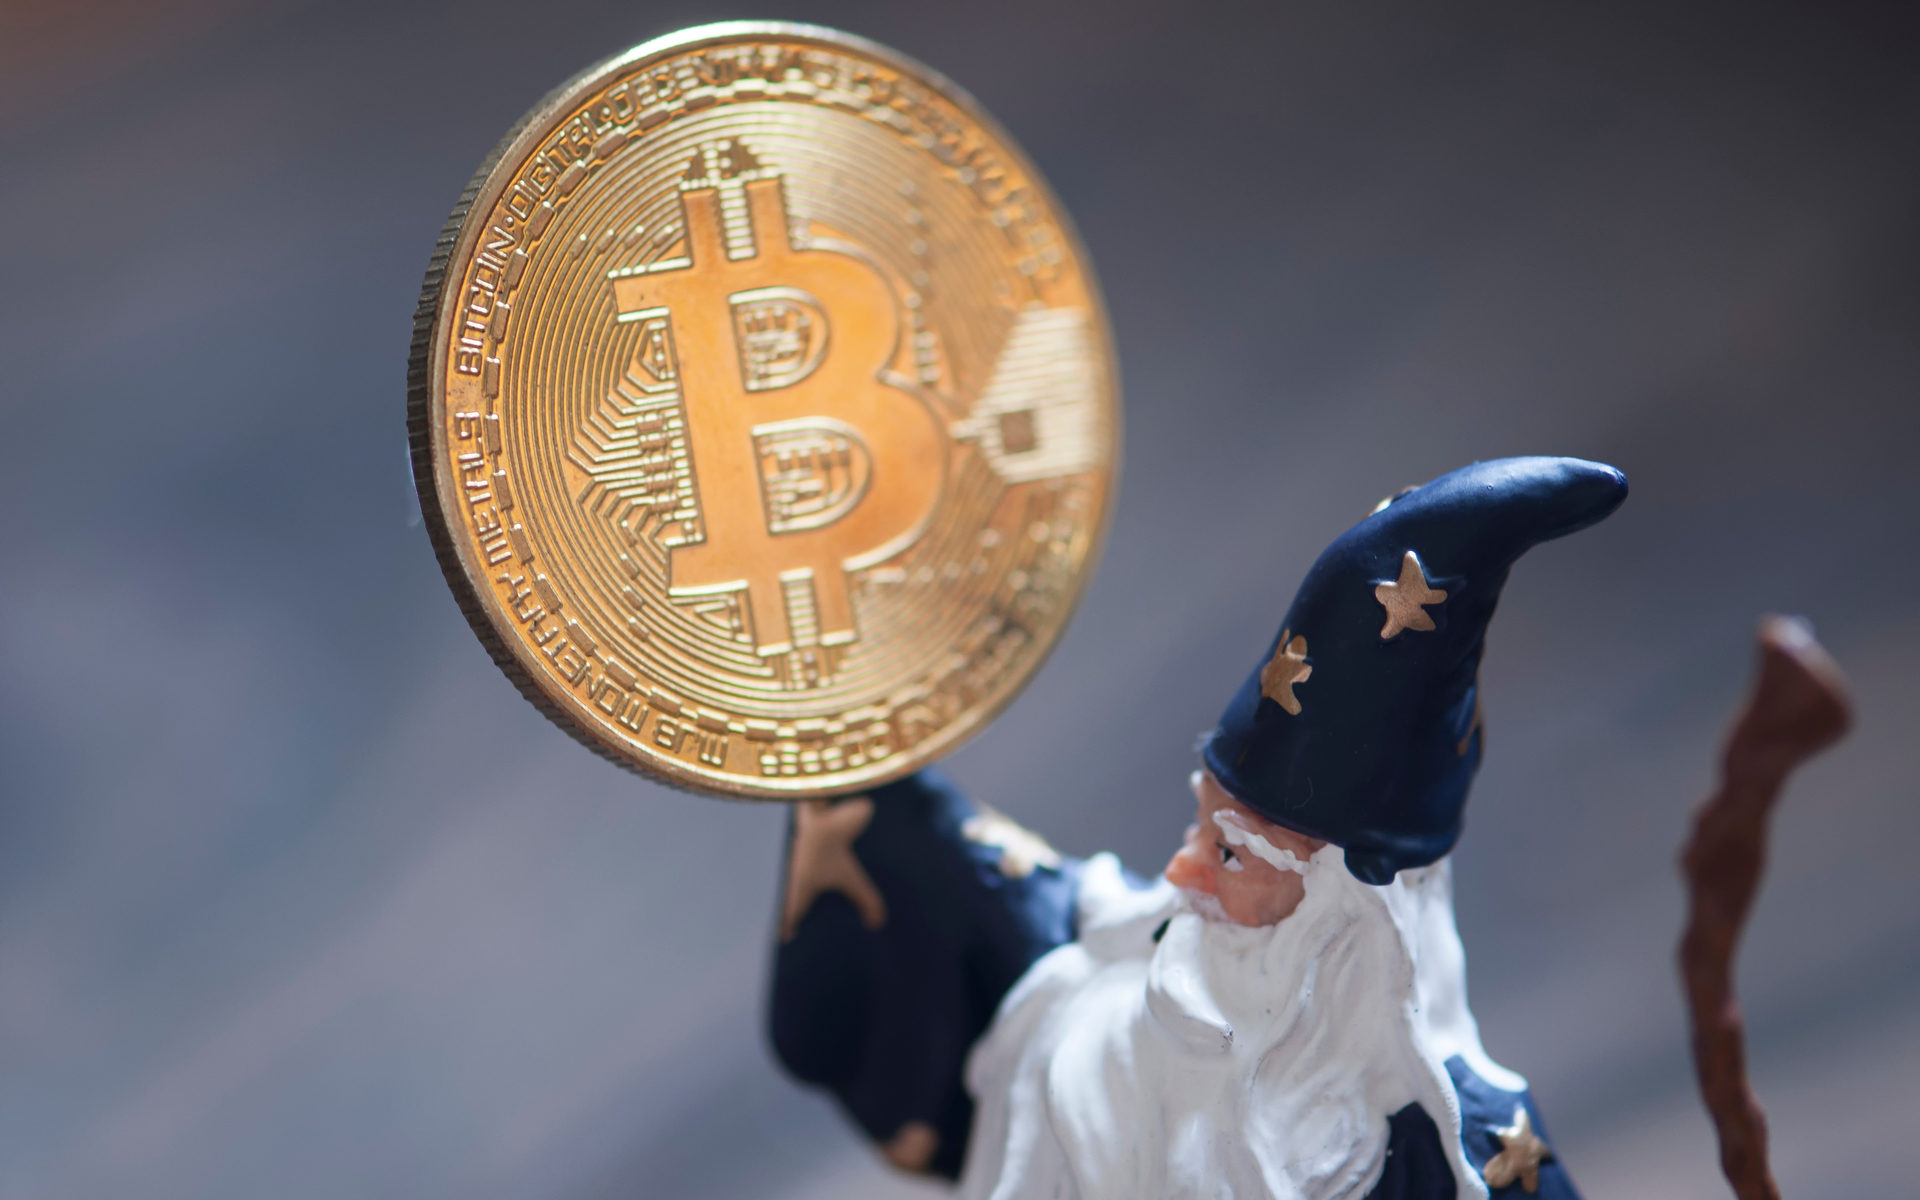 bitcoin speculation